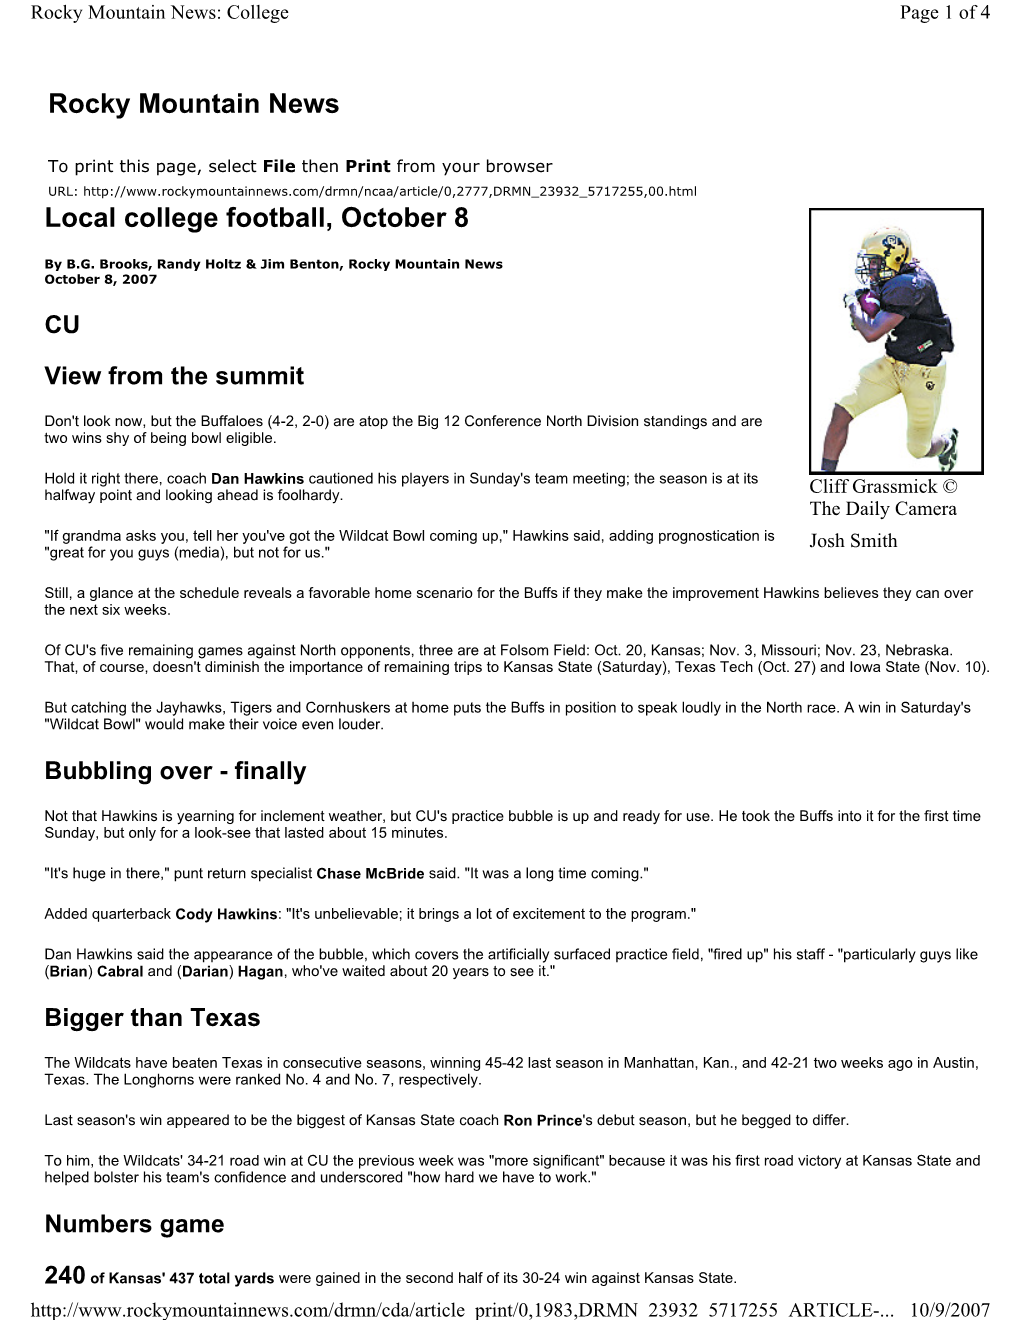 Kansas State / CU Football Page 1 of 2